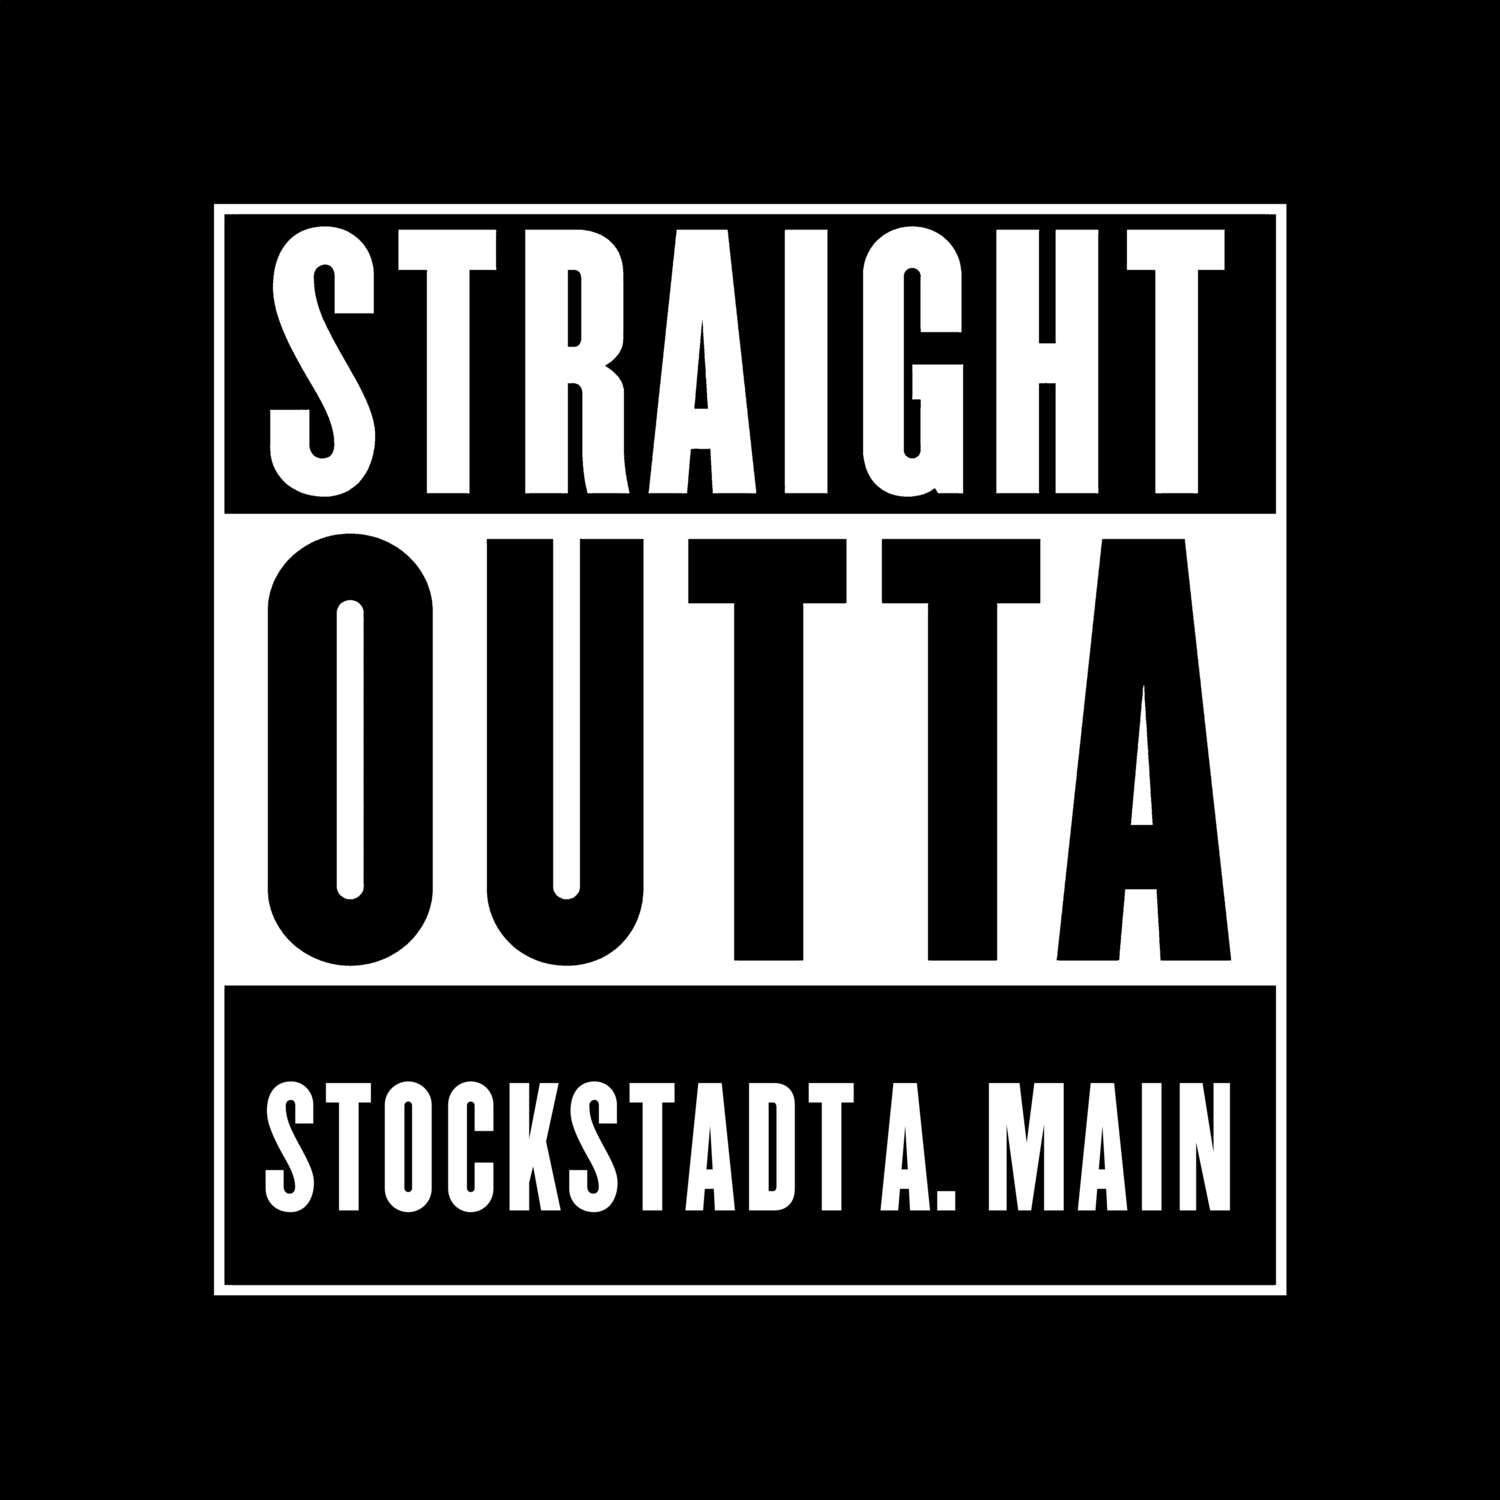 Stockstadt a. Main T-Shirt »Straight Outta«